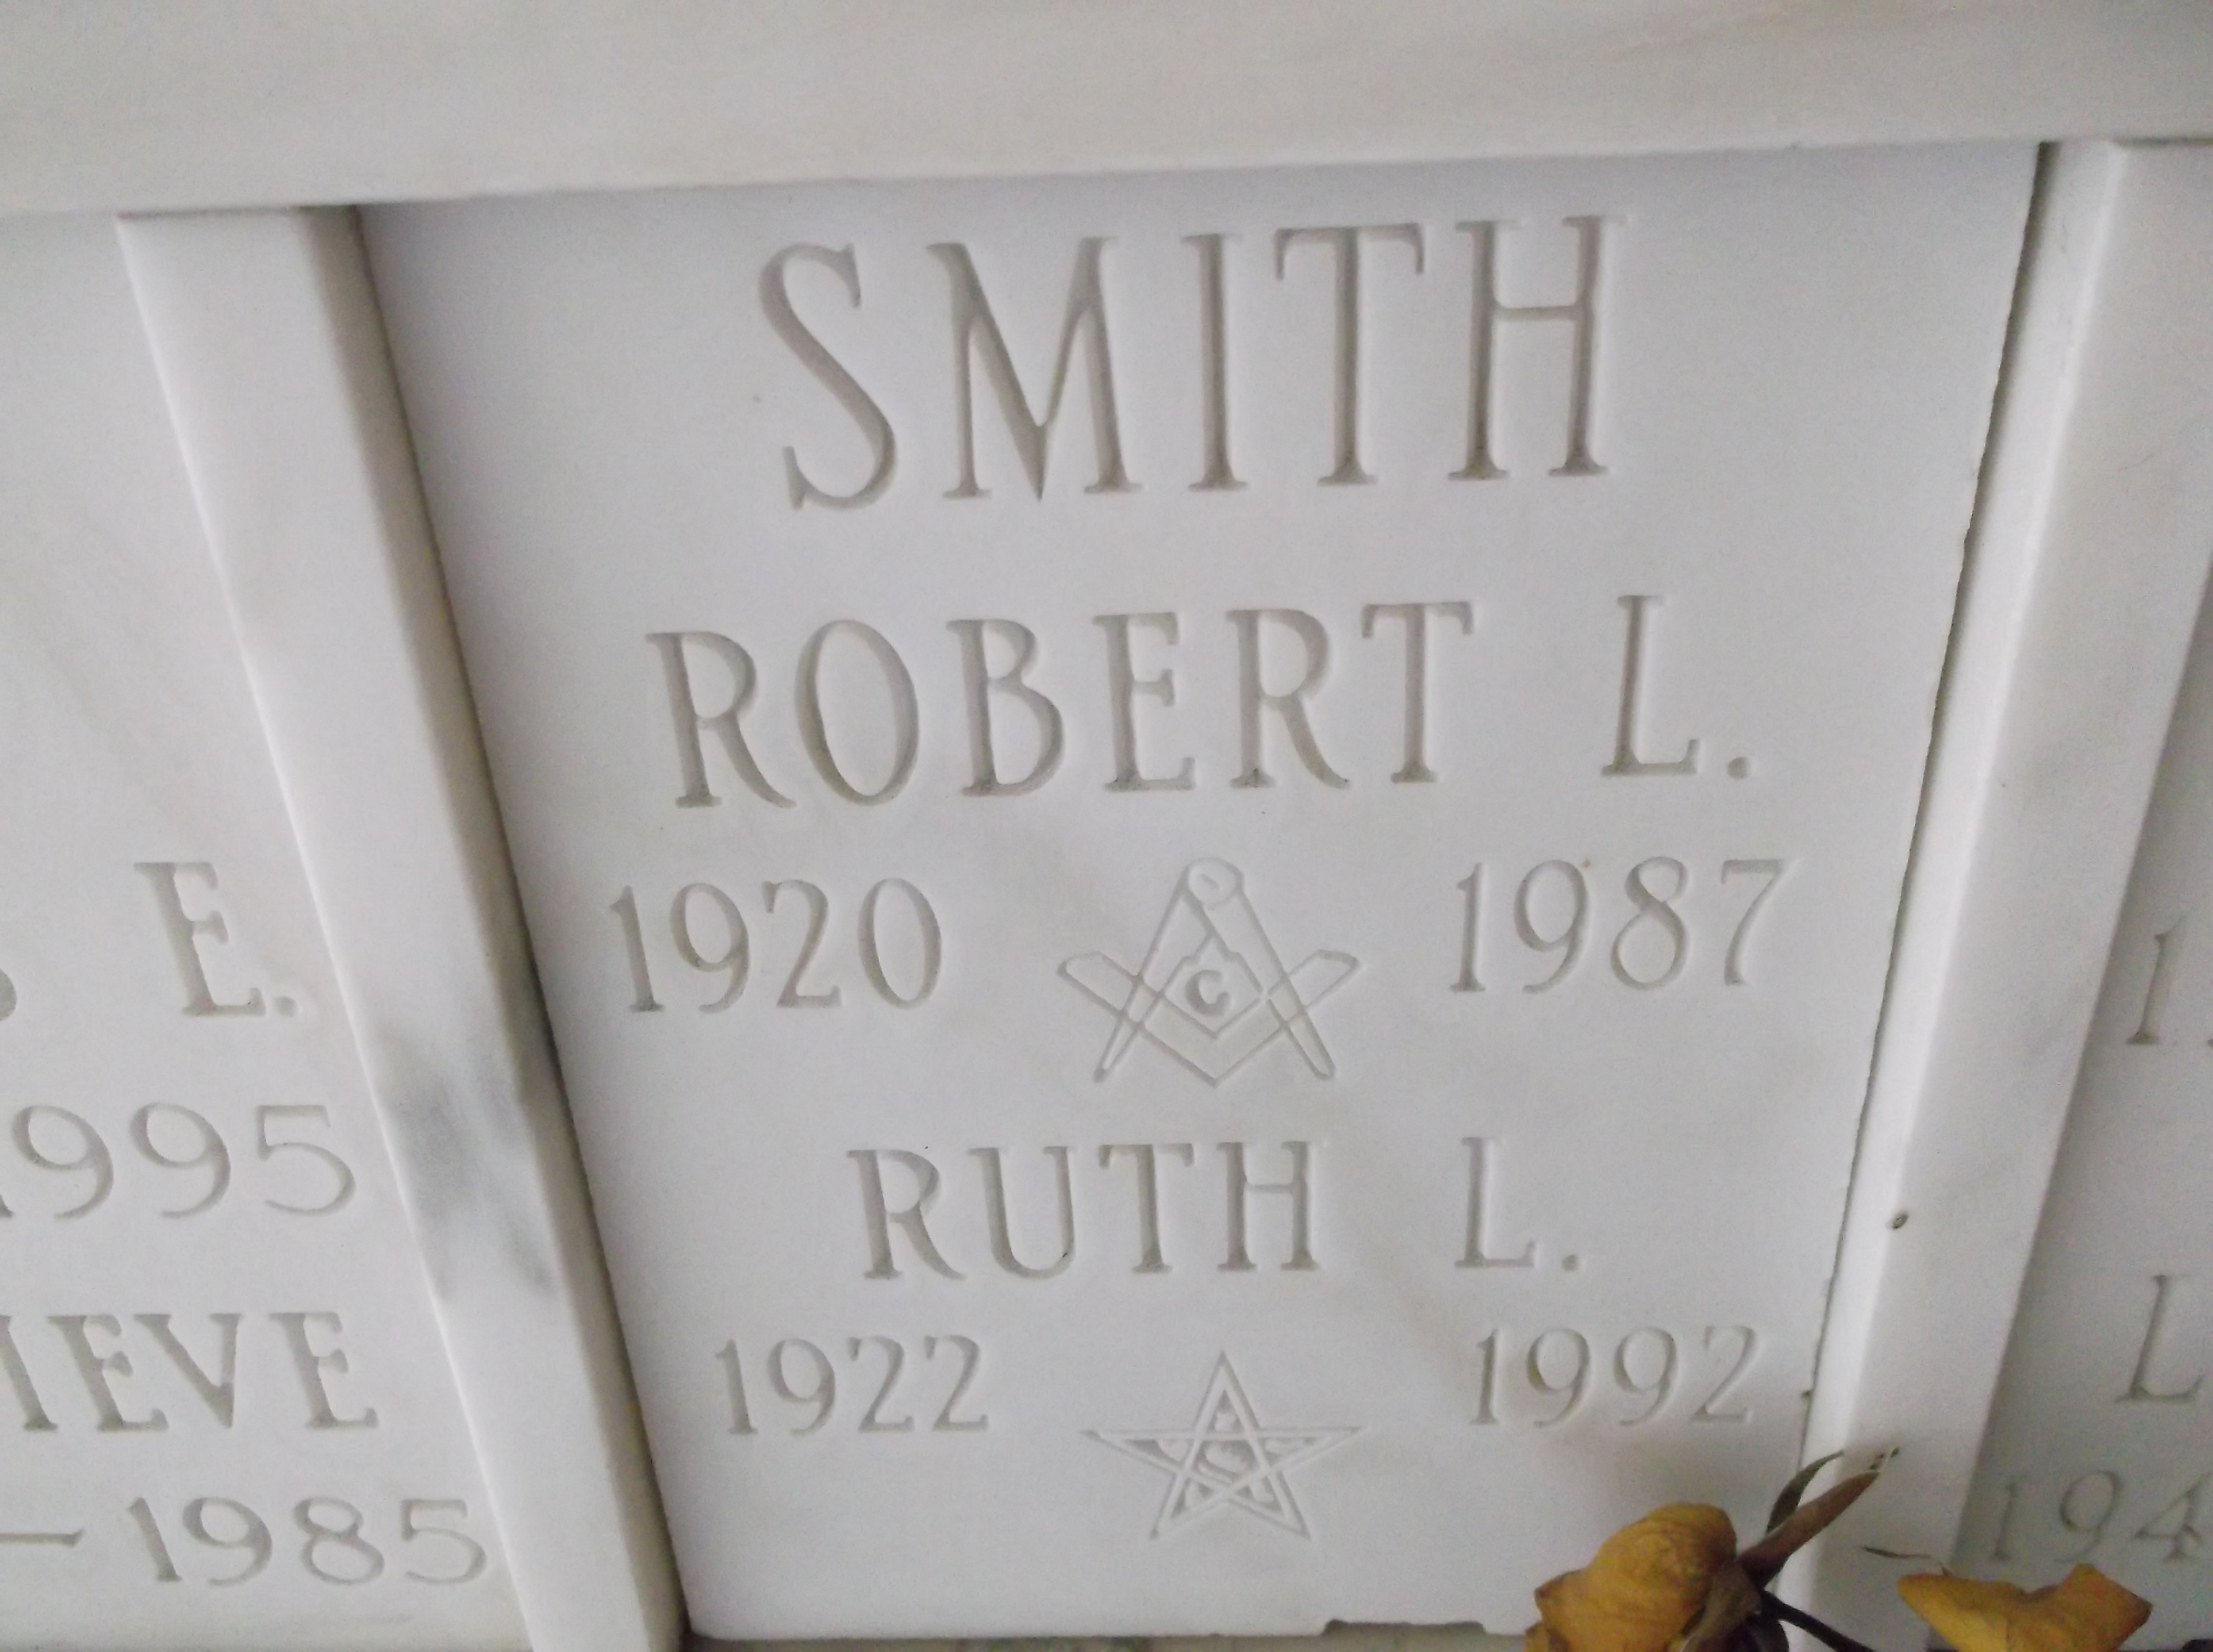 Robert L Smith